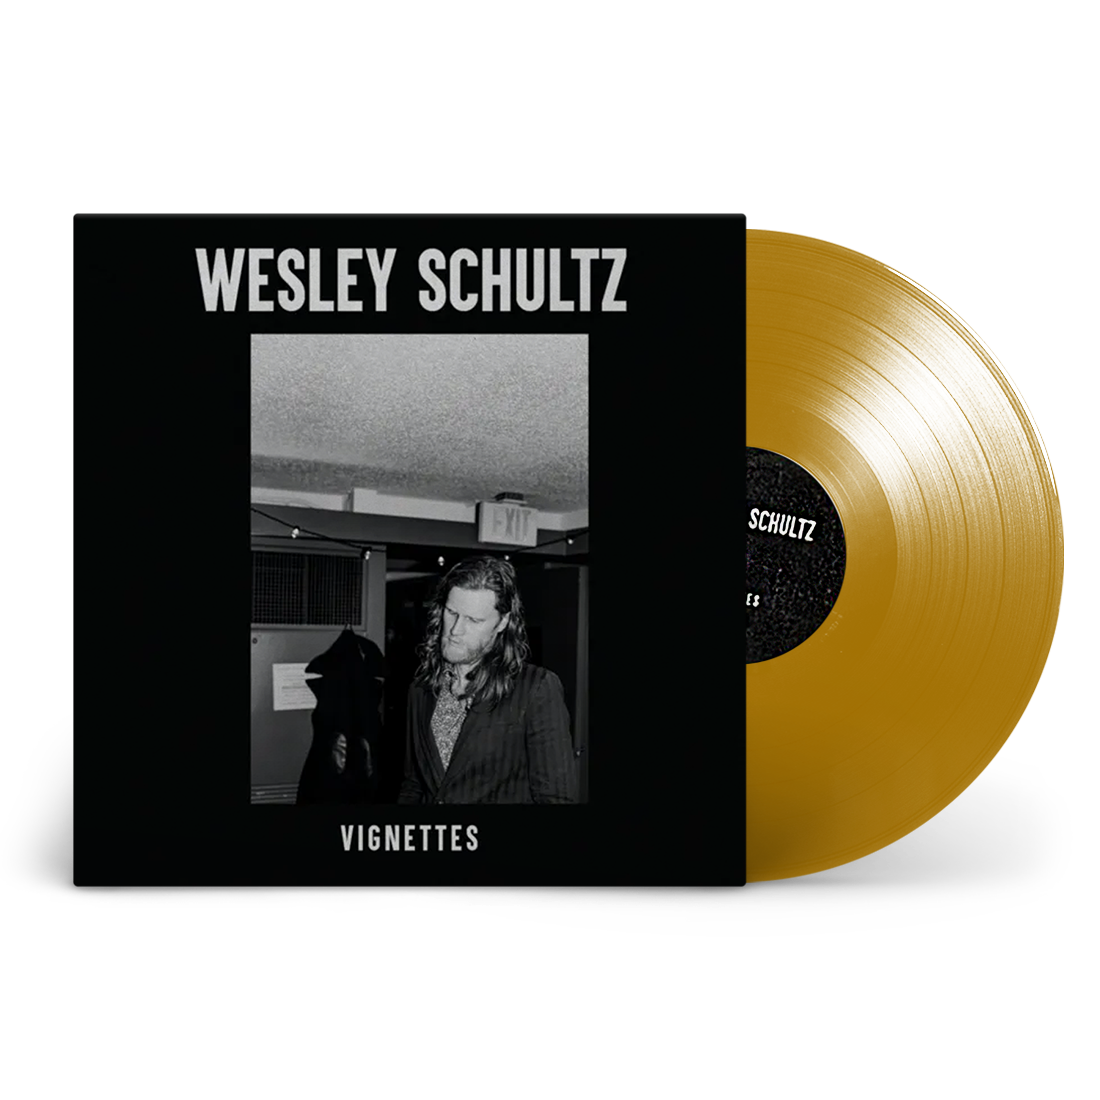 Vignettes: Gold Vinyl LP + Signed Insert